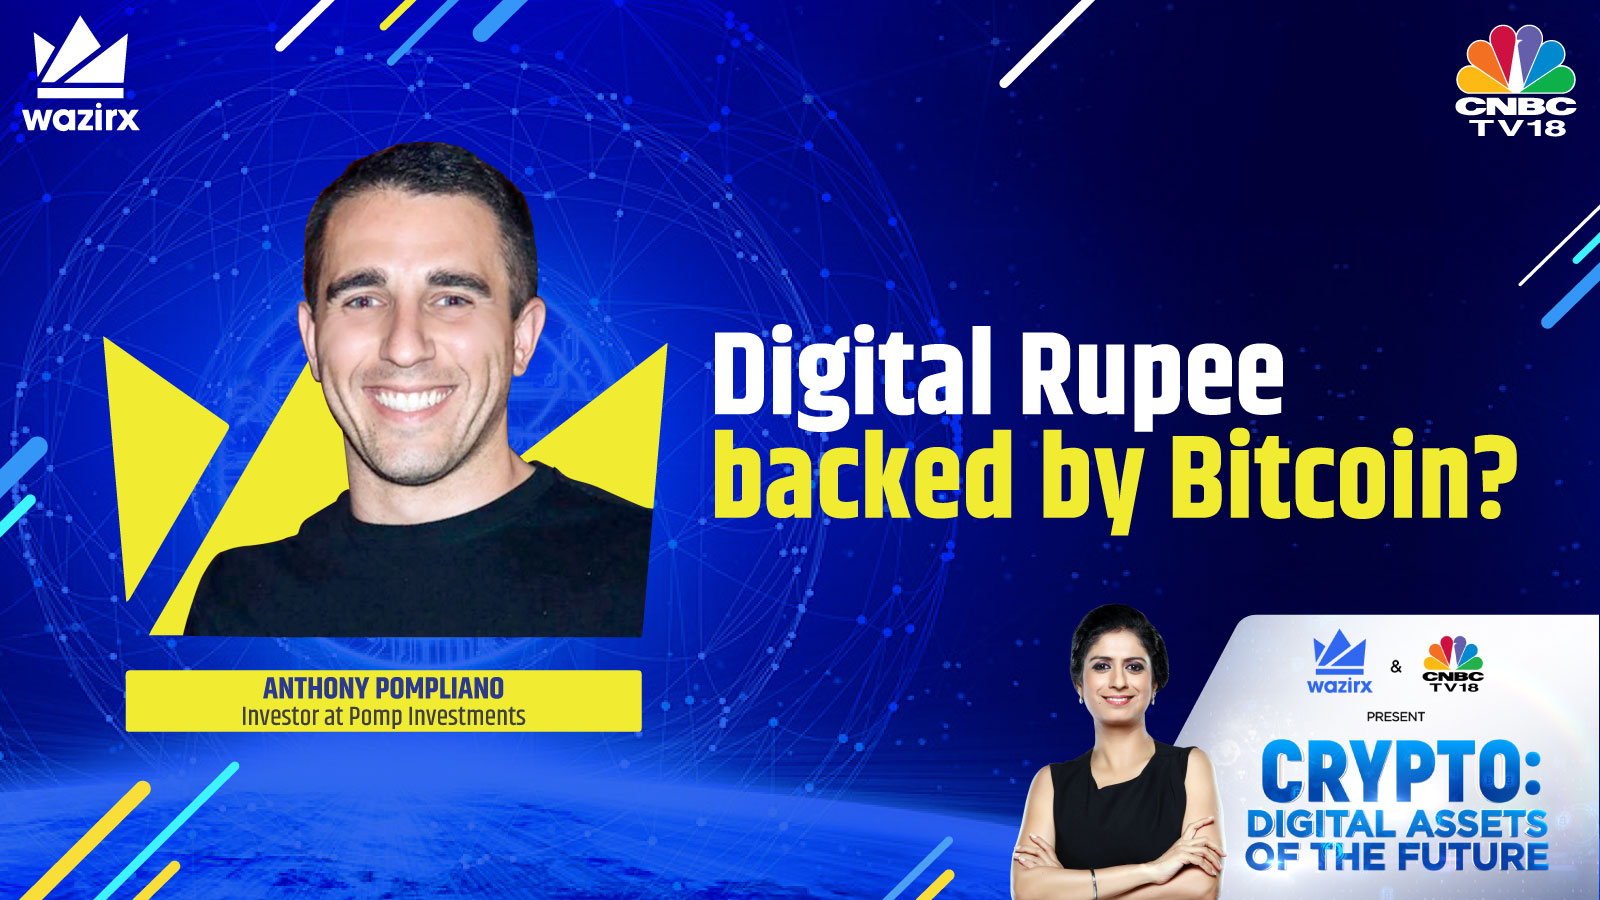 Anthony Pompliano on Digital Rupee backed by Bitcoin